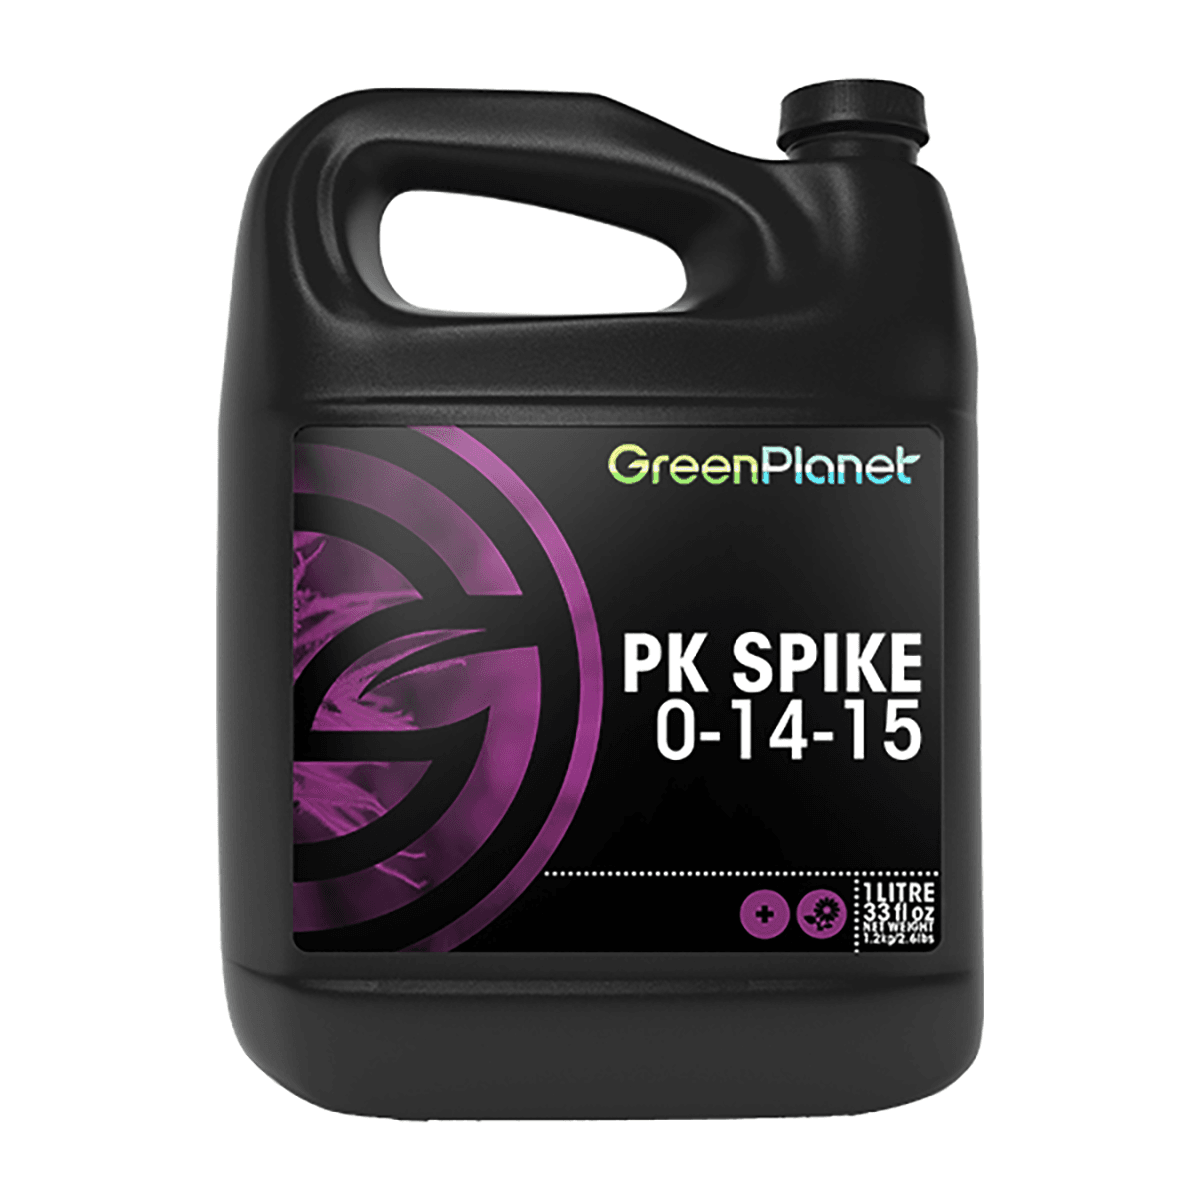 PK Spike 5L - Green planet